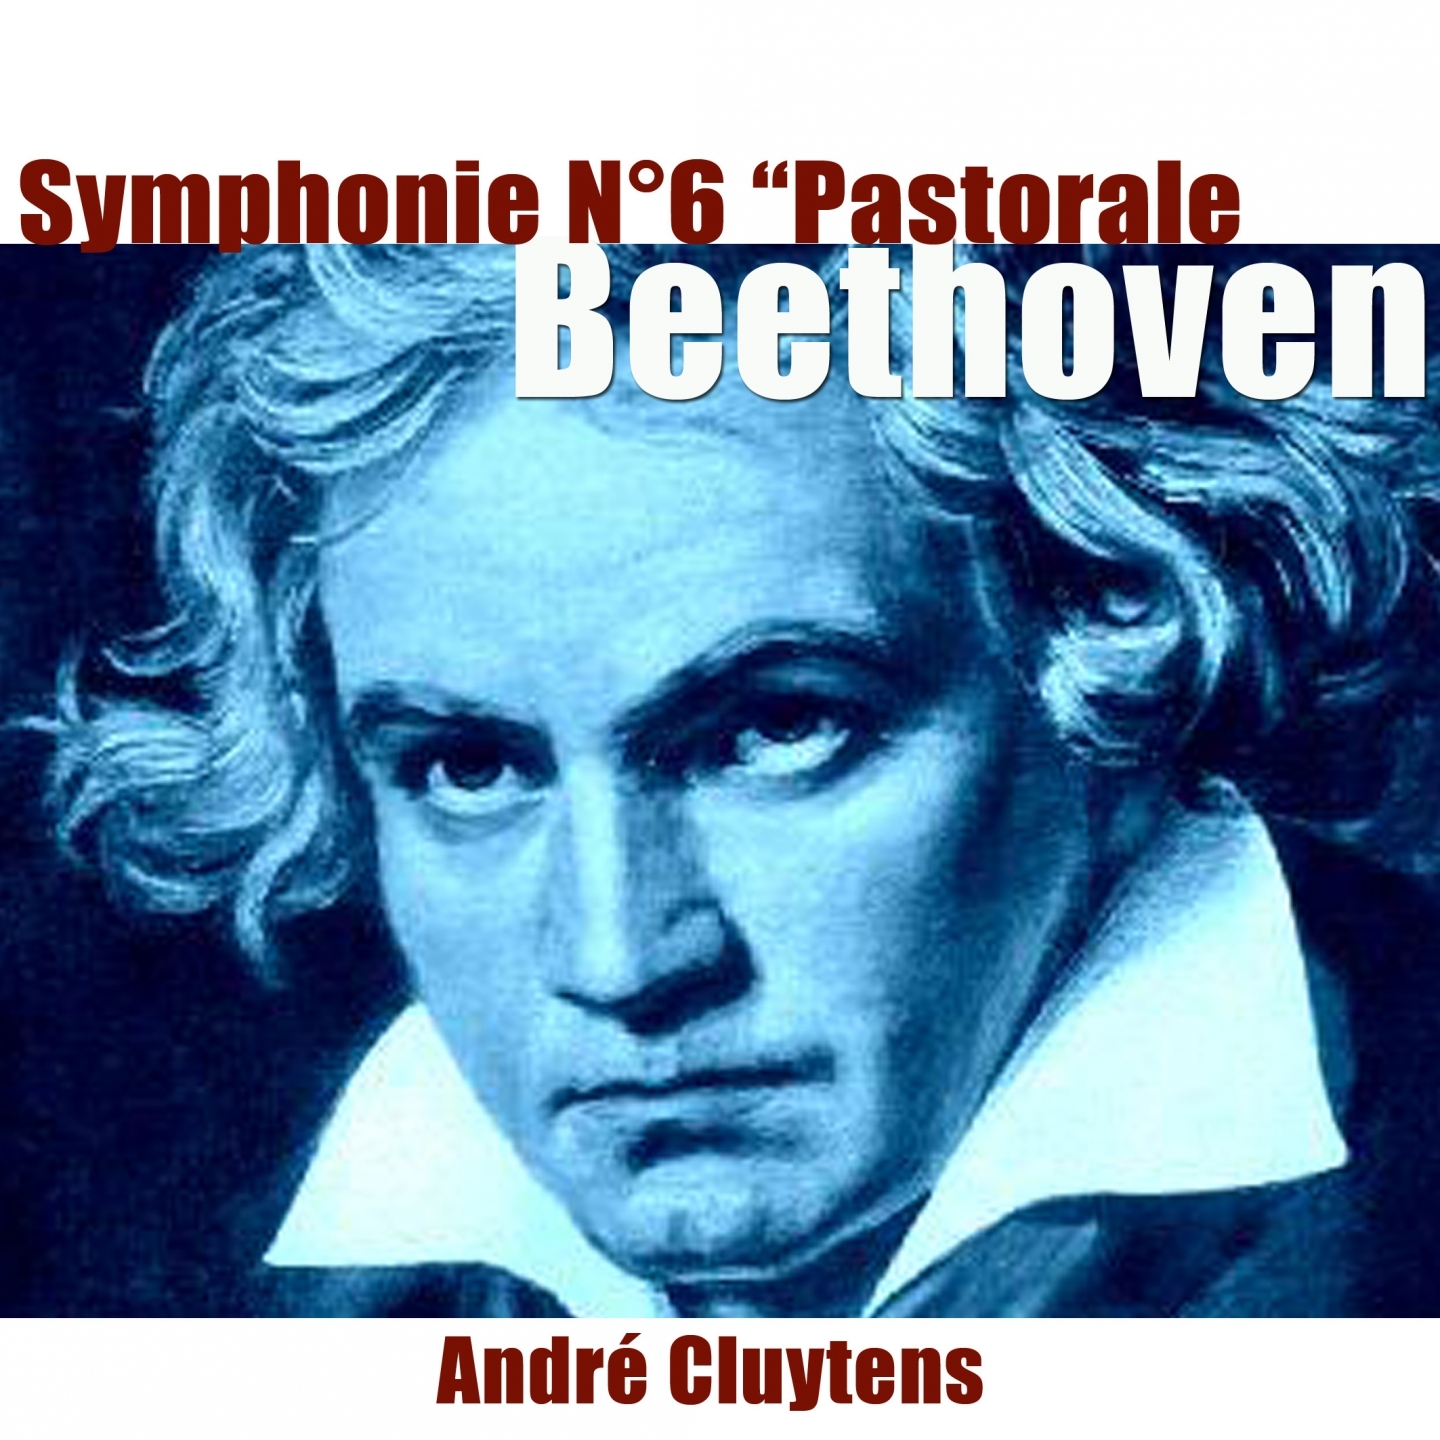 Beethoven: Symphonie No. 6, Op. 68 "Pastorale"